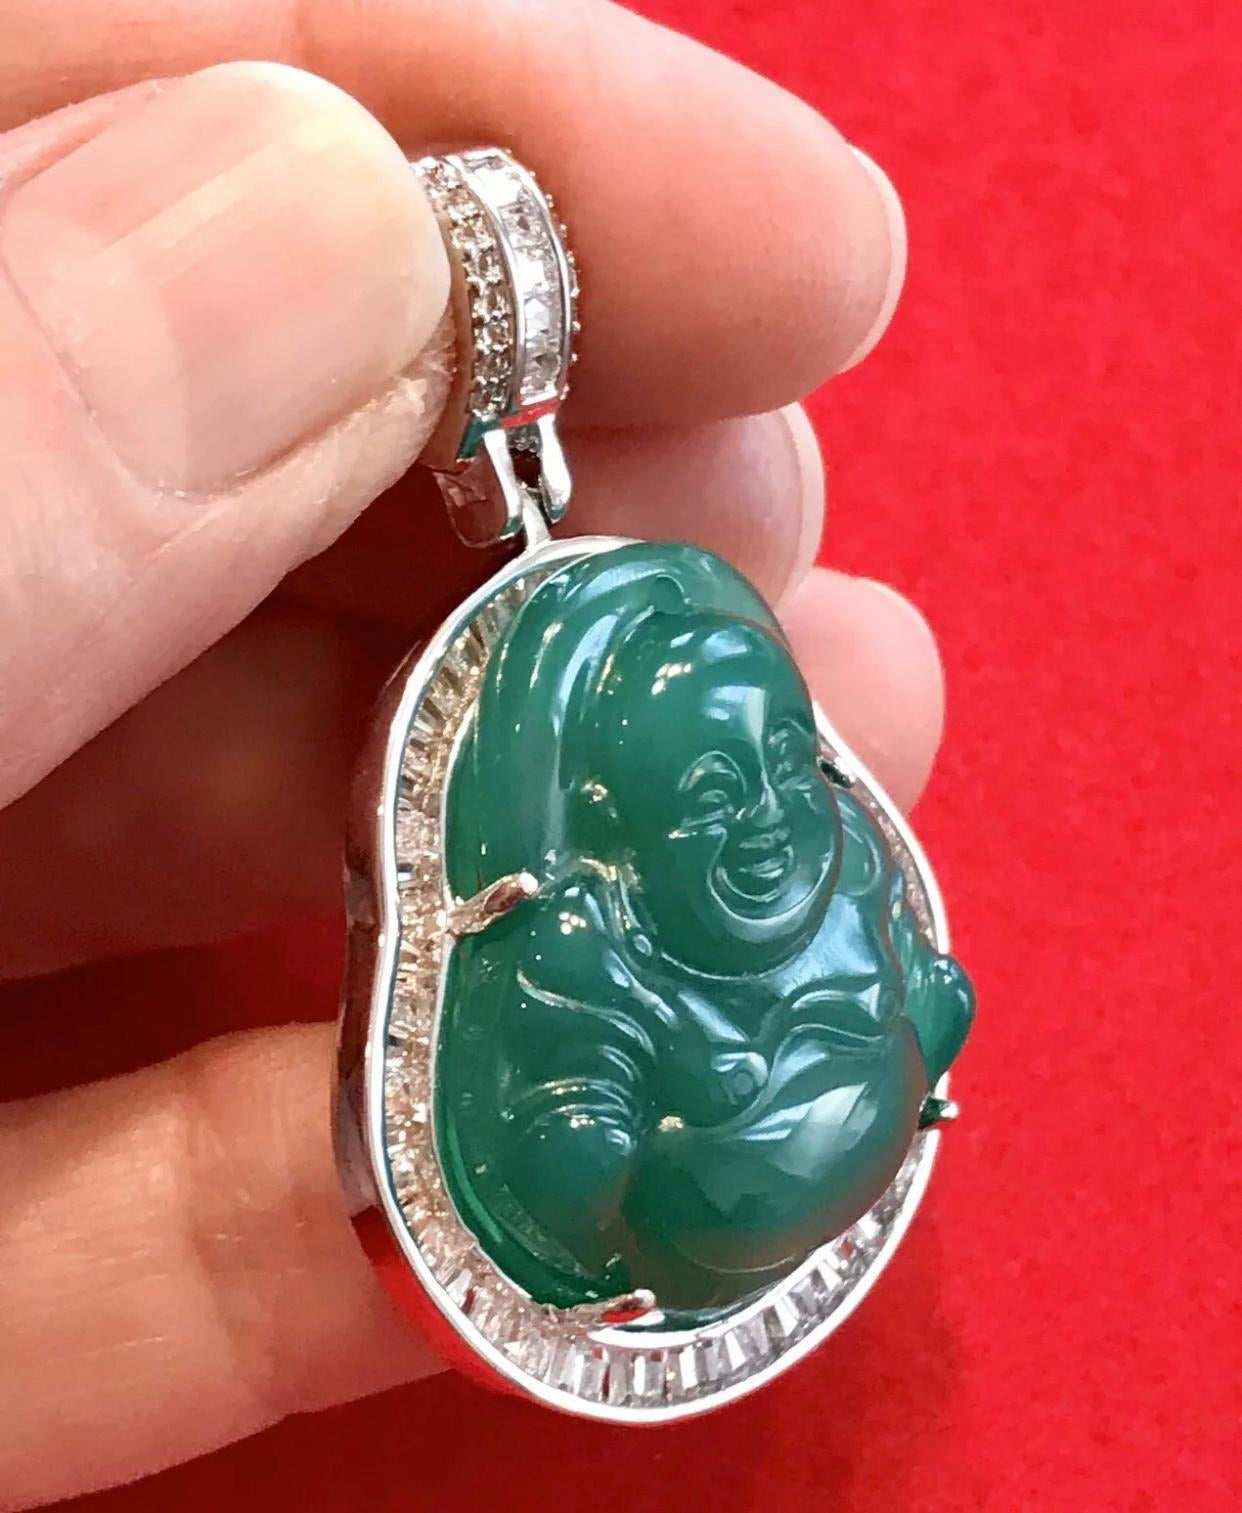 Buddha pendant and Necklace